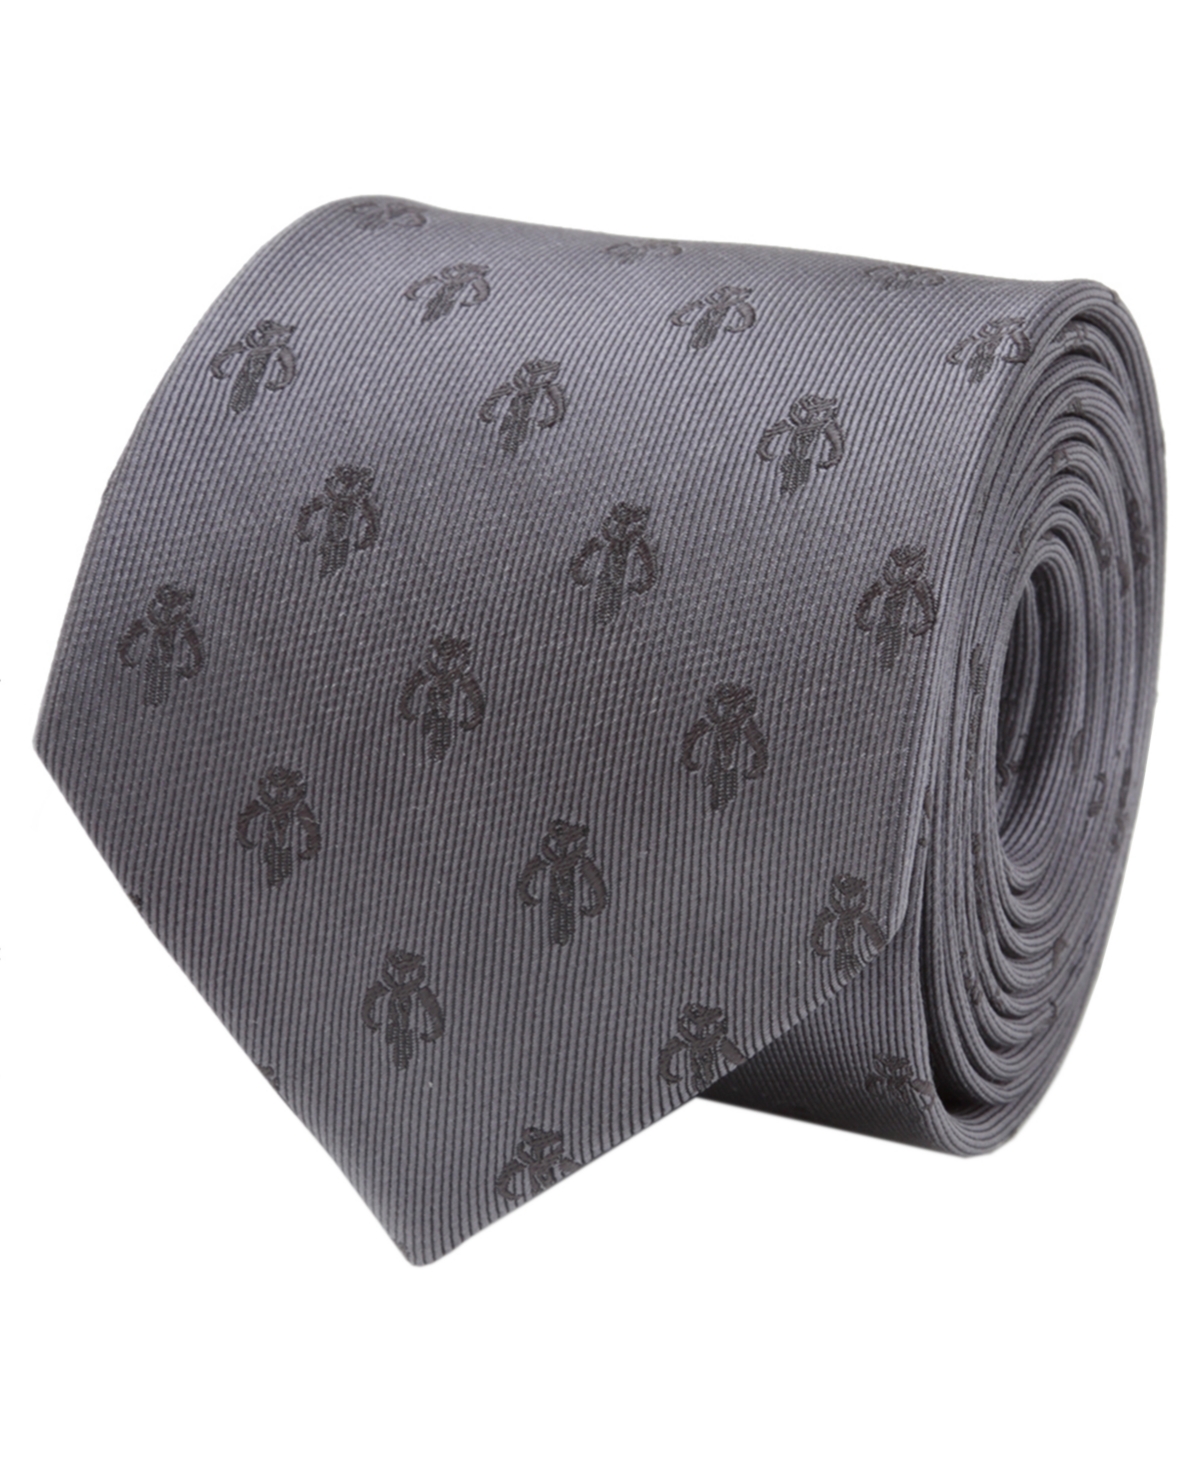 Men's Mandalorian Tie - Gray